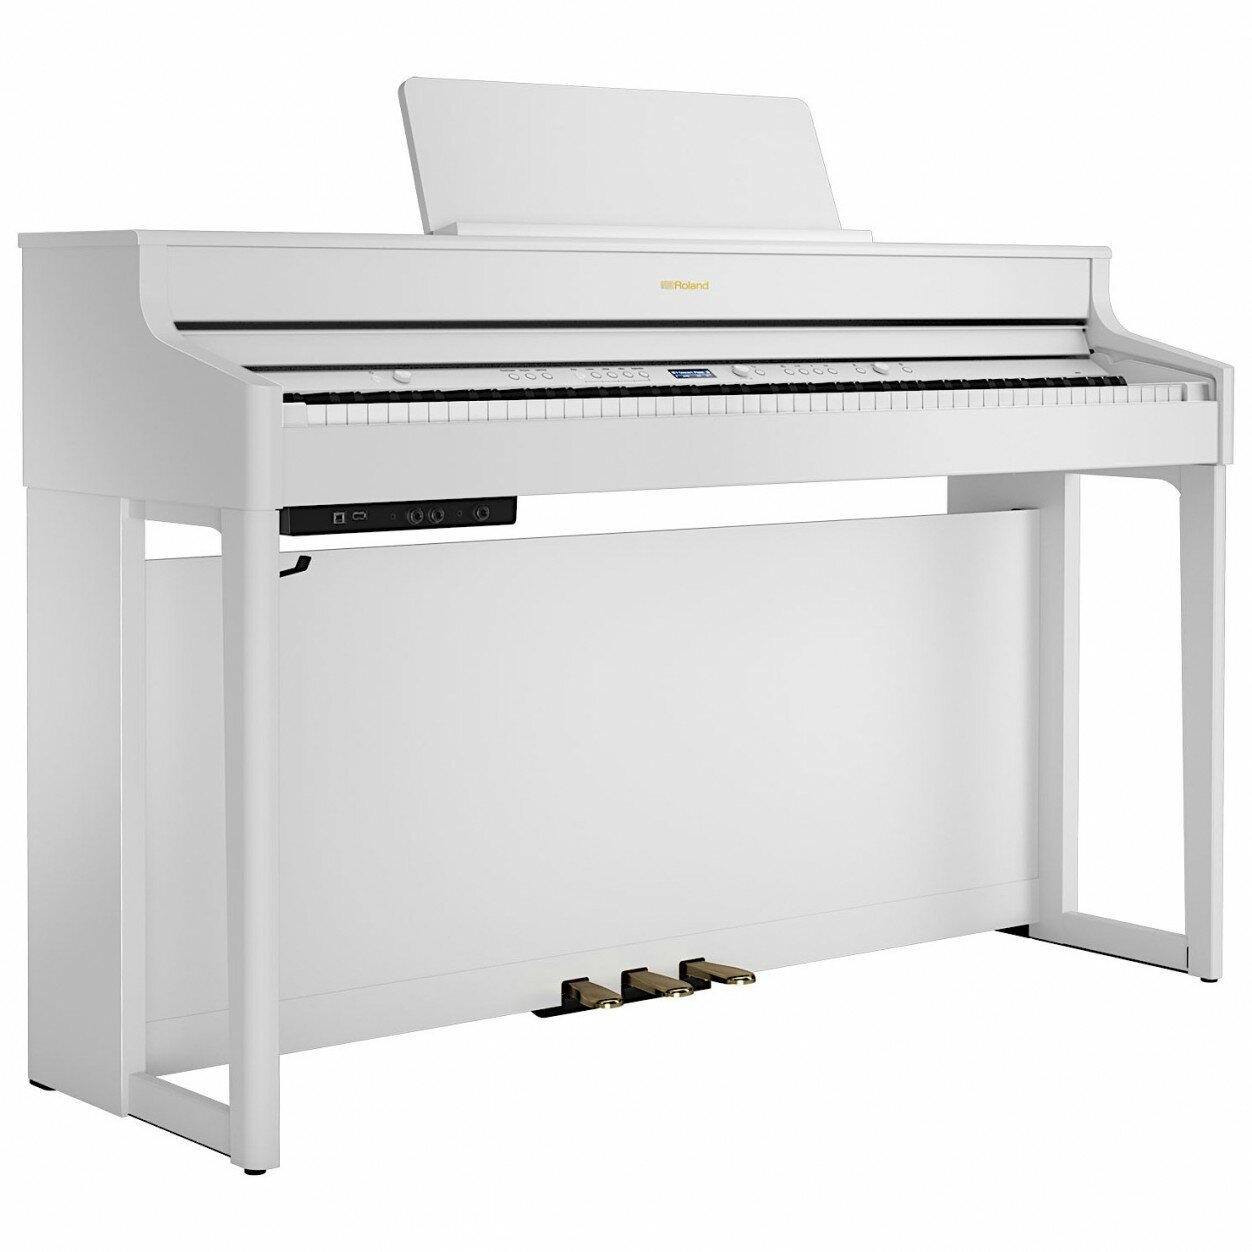 Roland HP702-WH цифровое фортепиано, 88 клавиш, без стенда, цвет белый